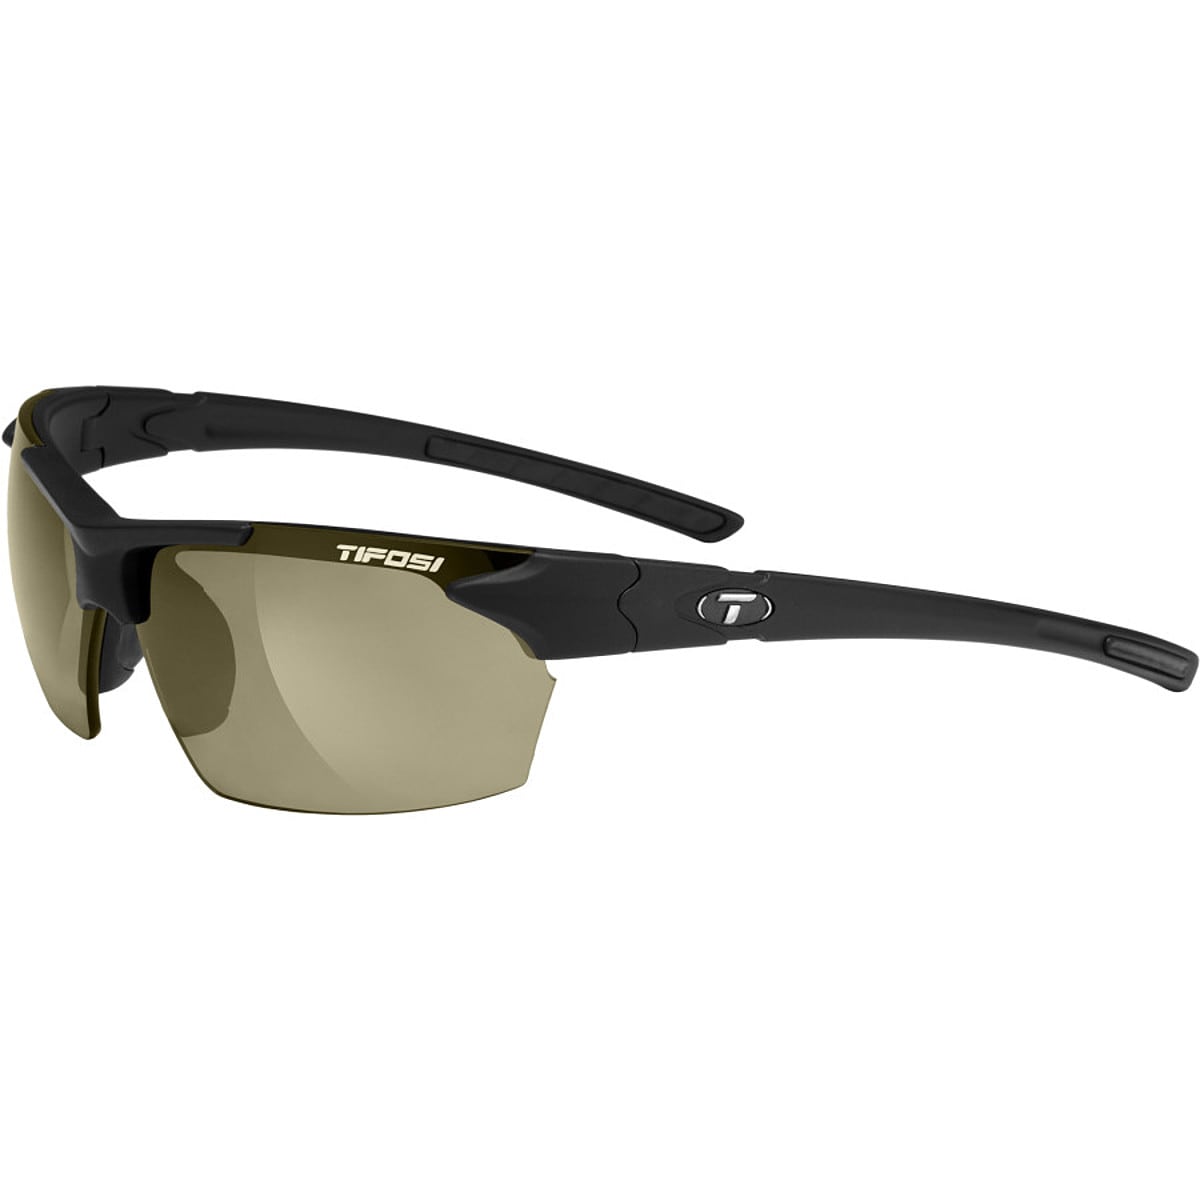 Tifosi Optics Jet Sunglasses - Men's